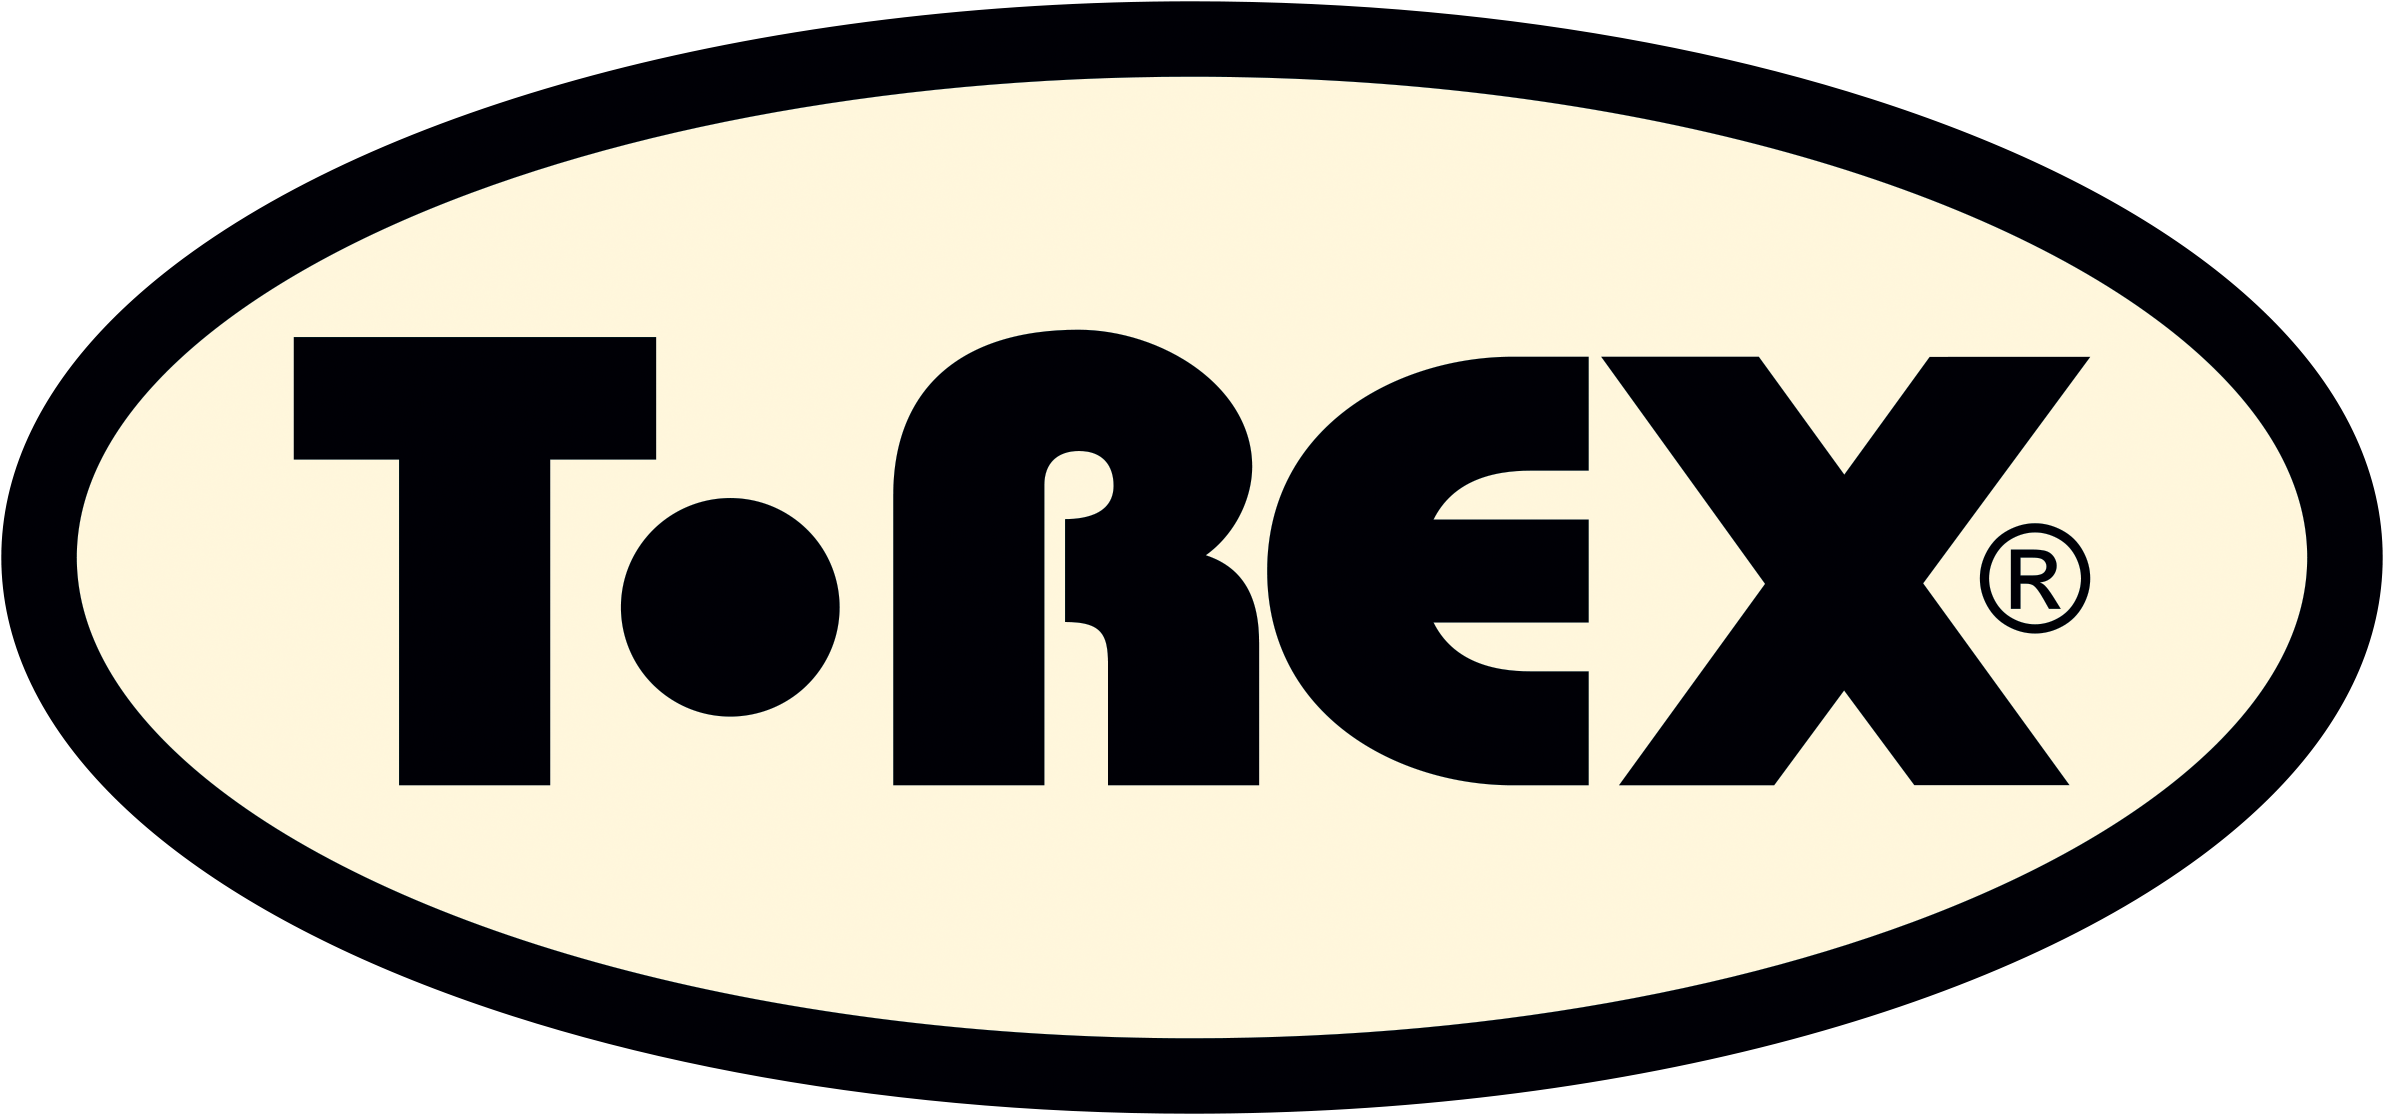 T-rex Effects - T Rex Hobo Drive (2398x1129)